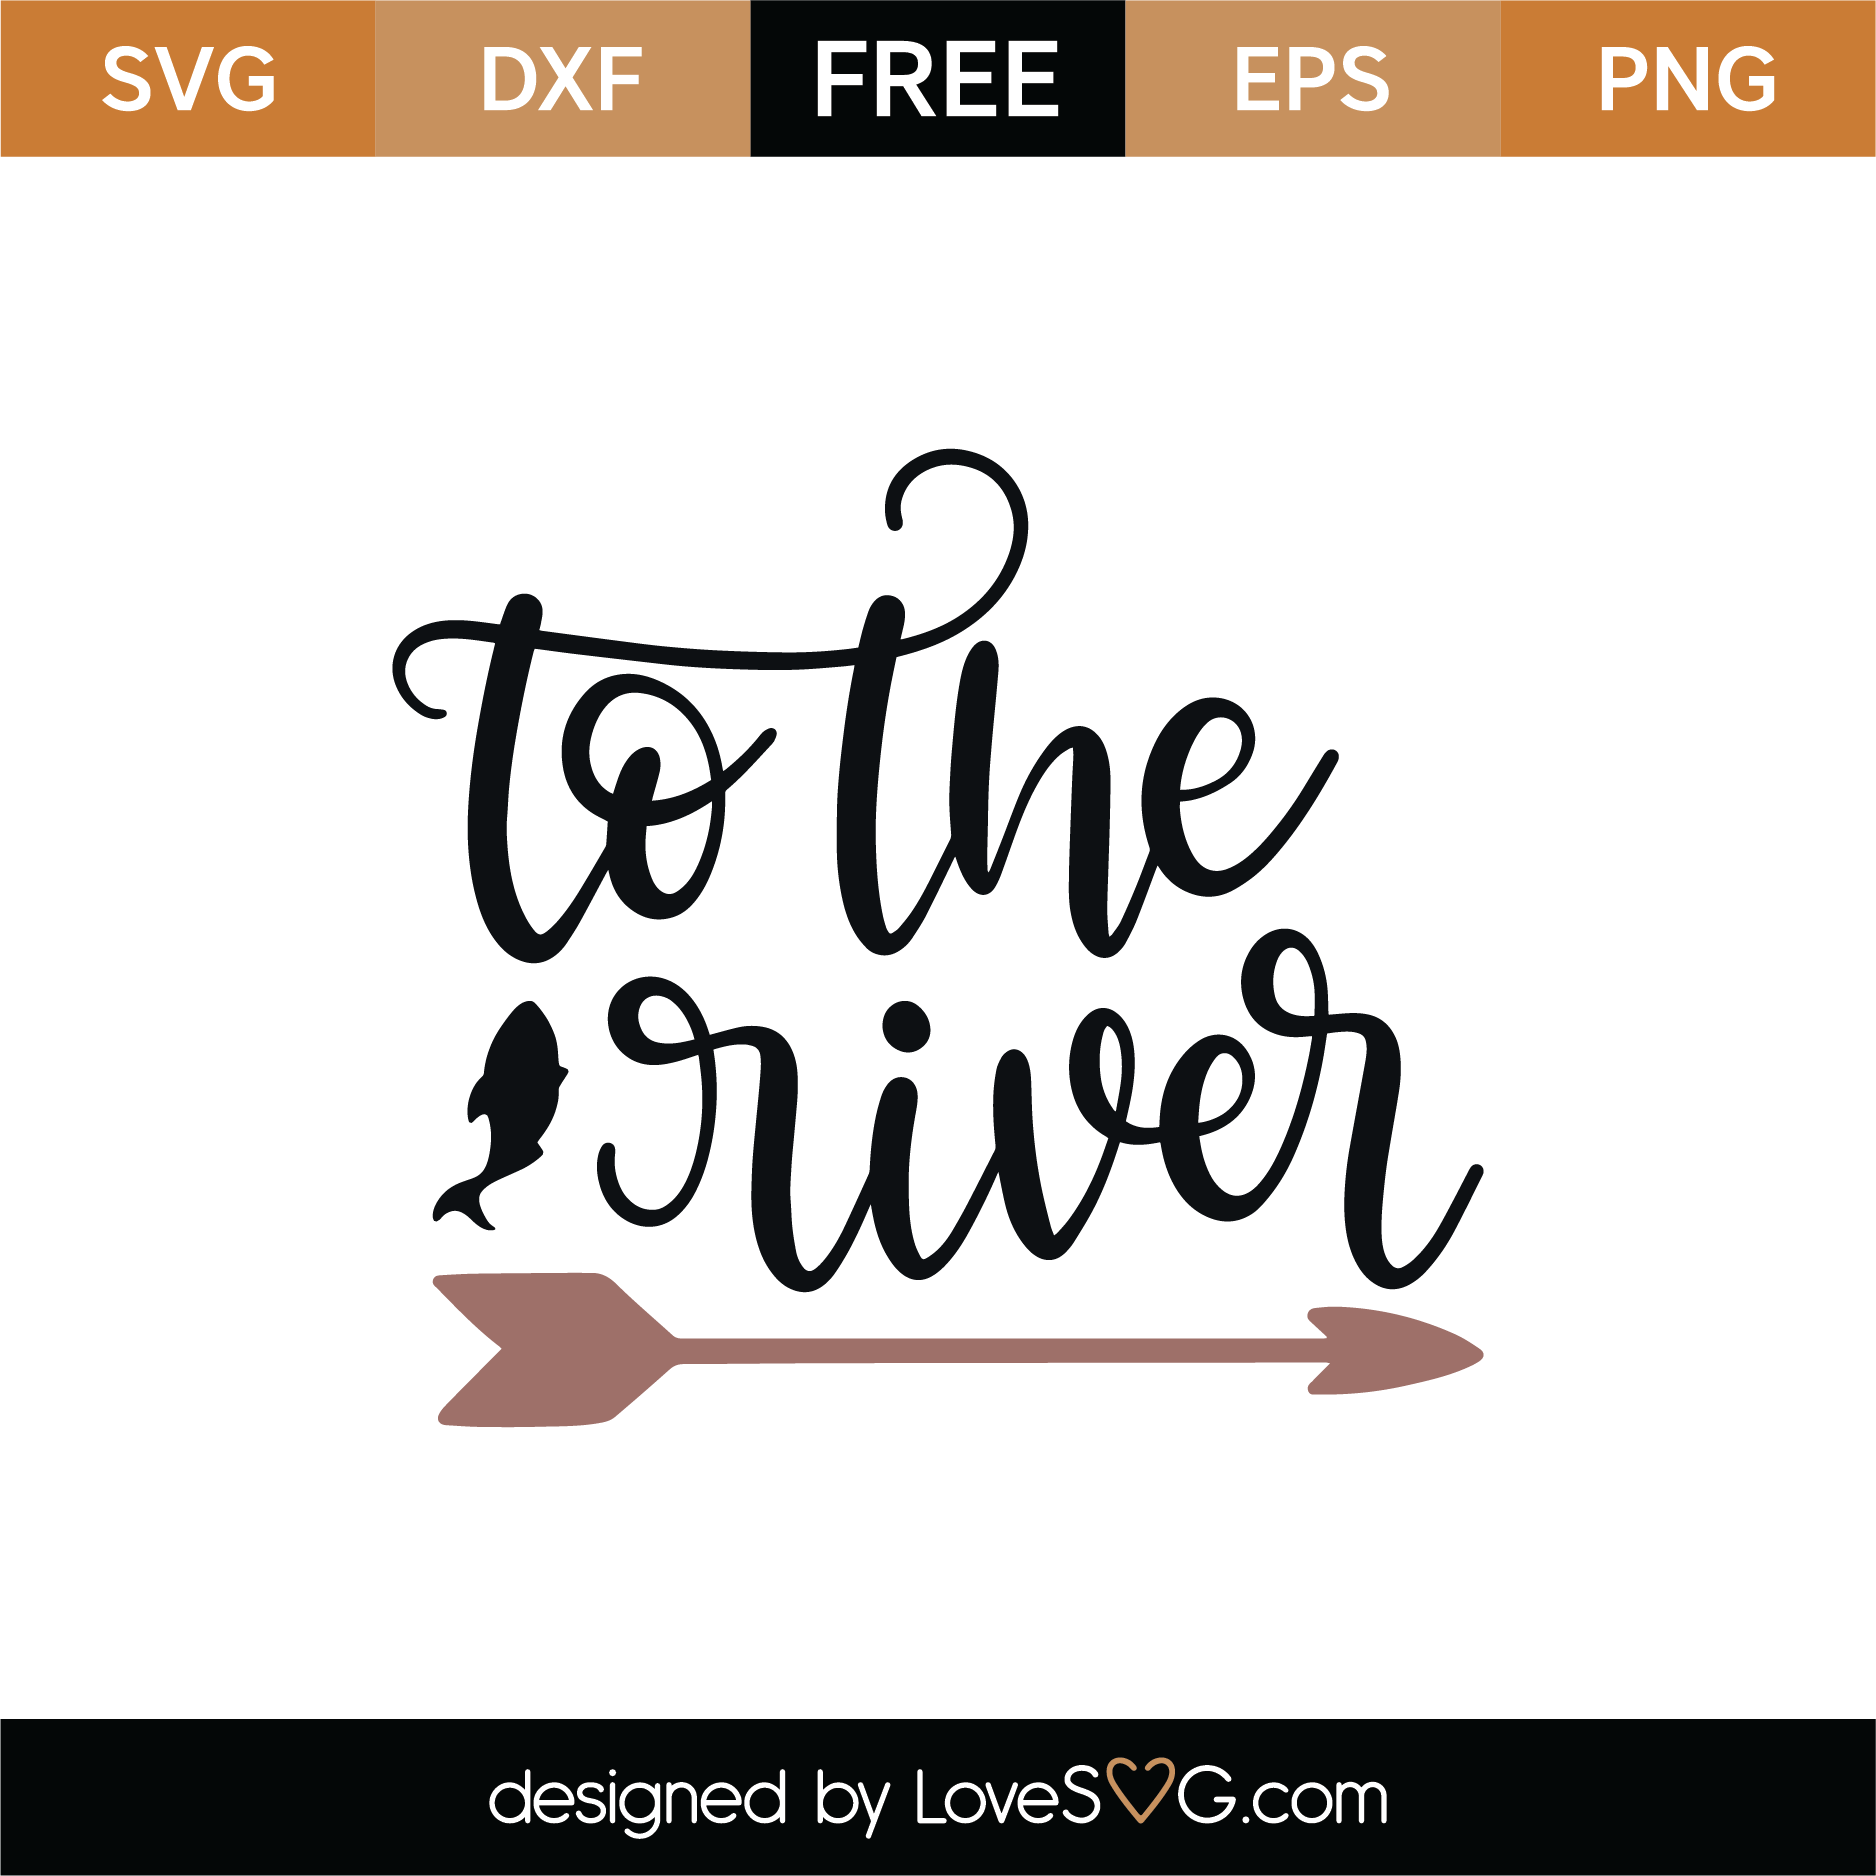 Download Free To The River SVG Cut File | Lovesvg.com